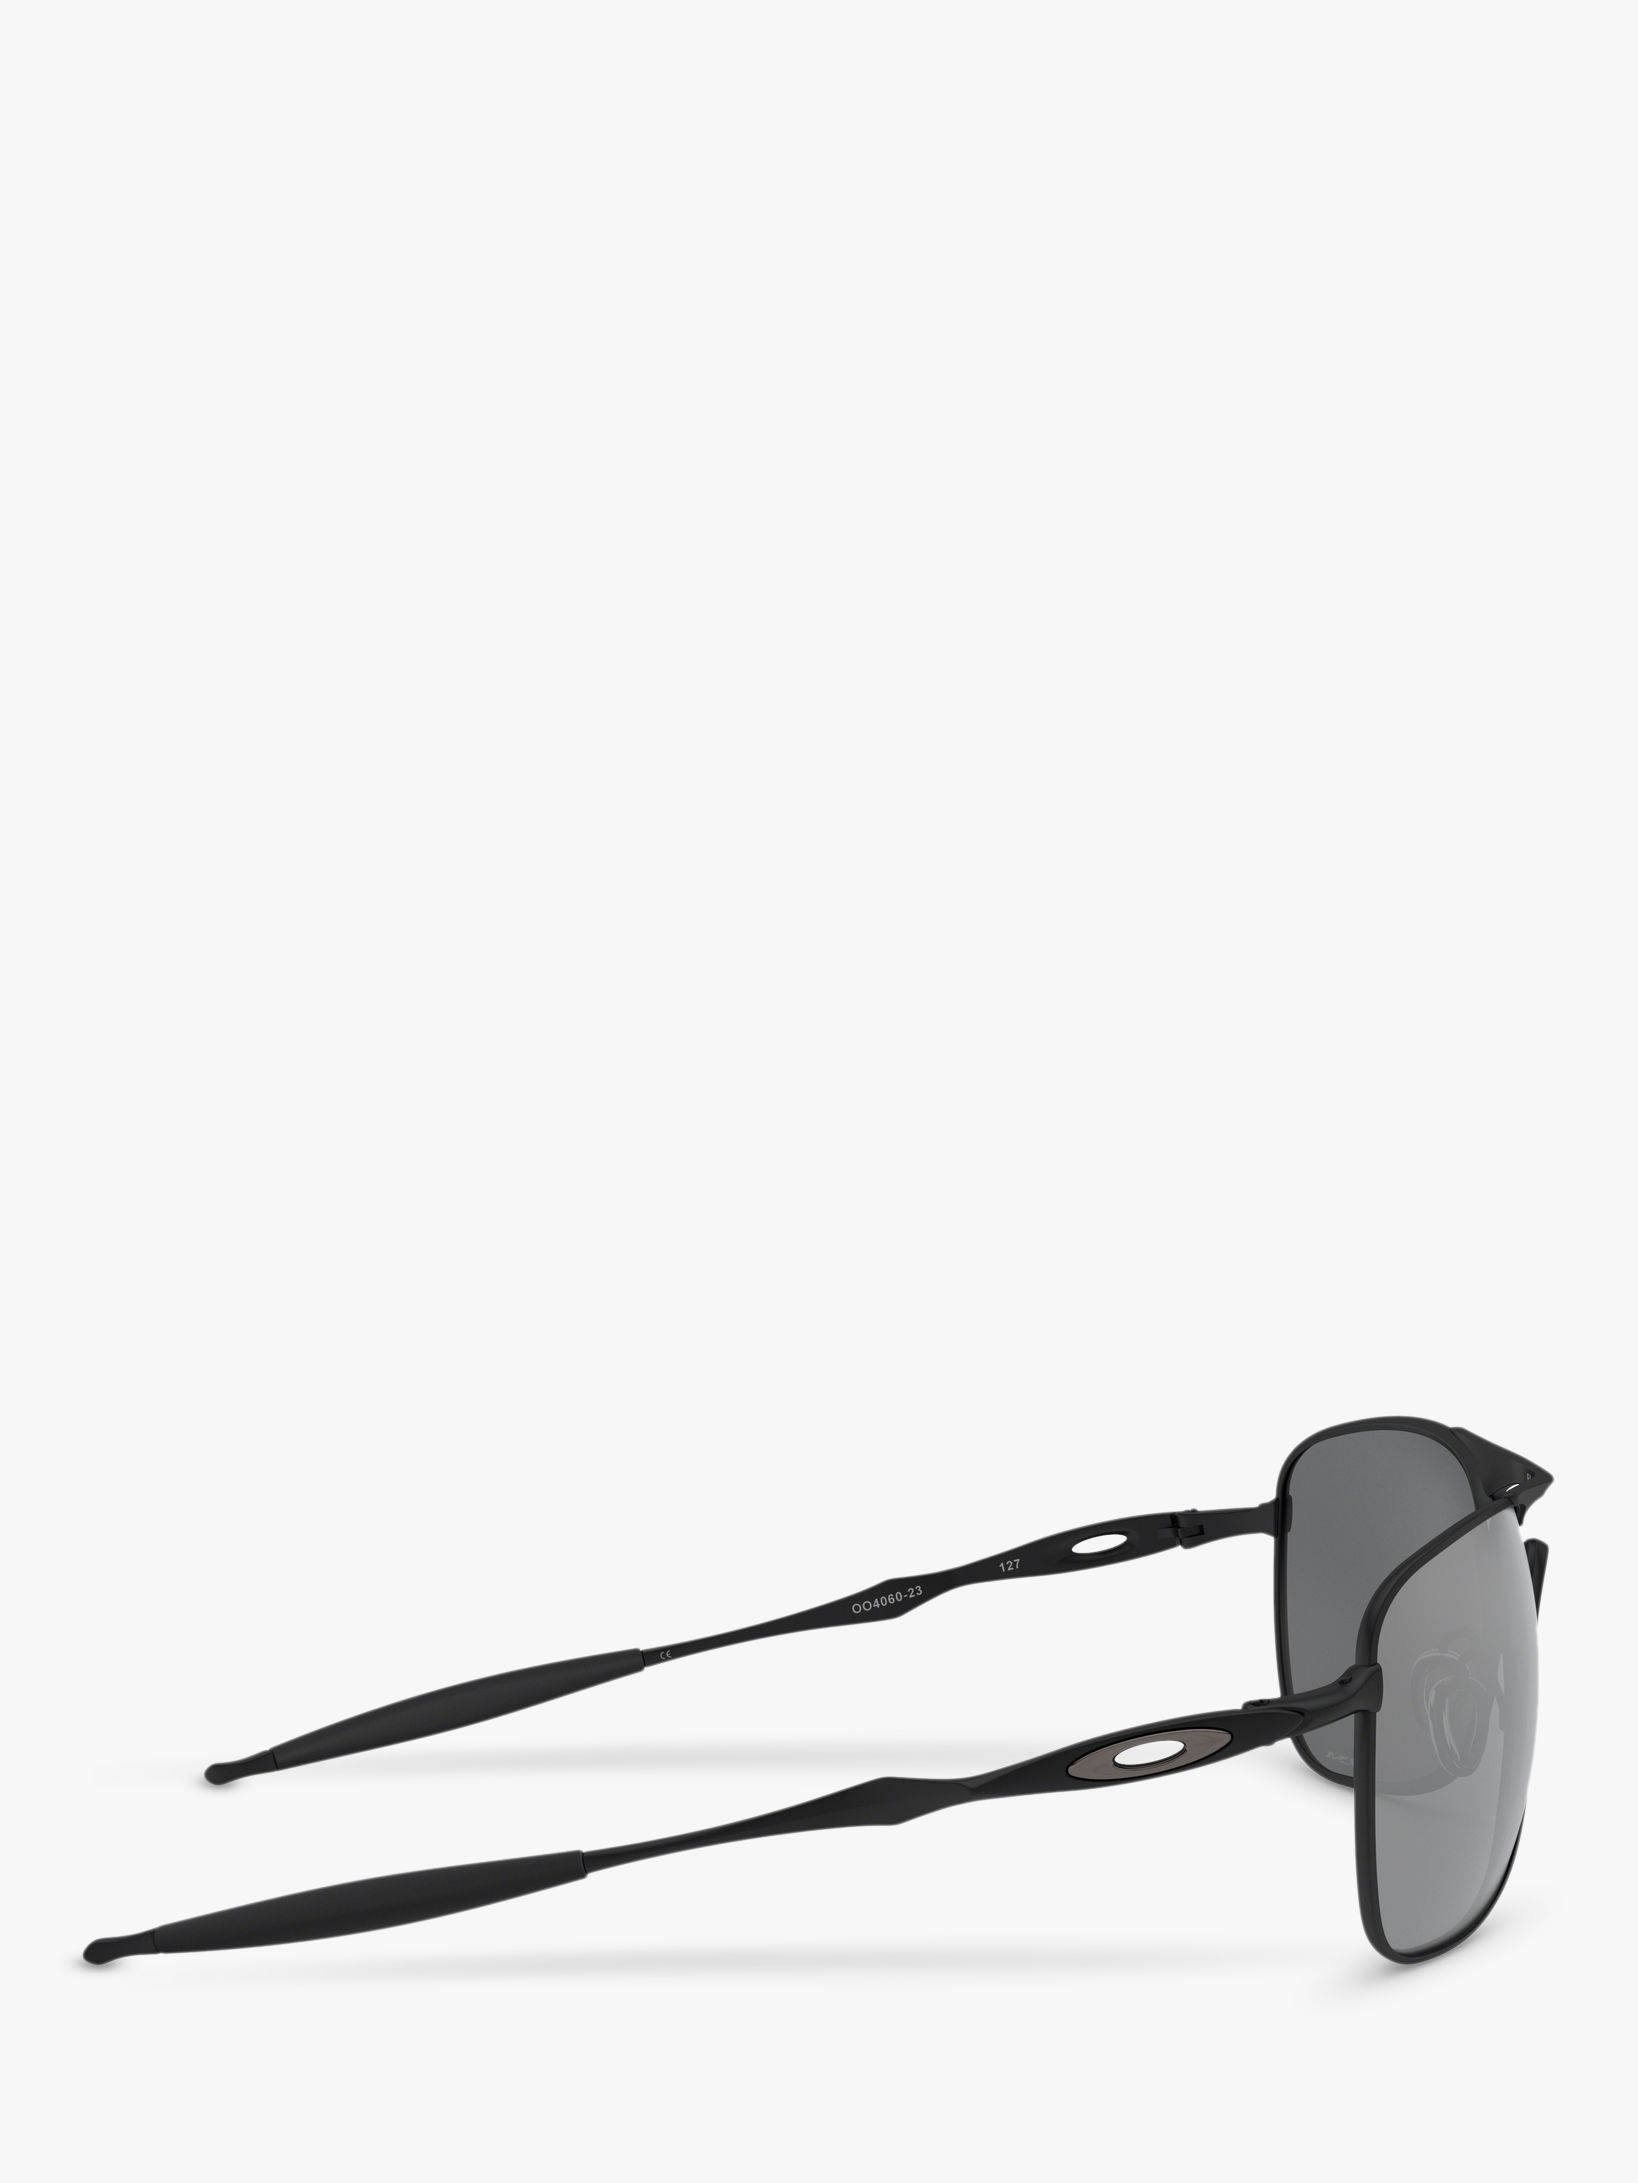 Buy Oakley OO4060 Men's Cross Hair Square Sunglasses Online at johnlewis.com